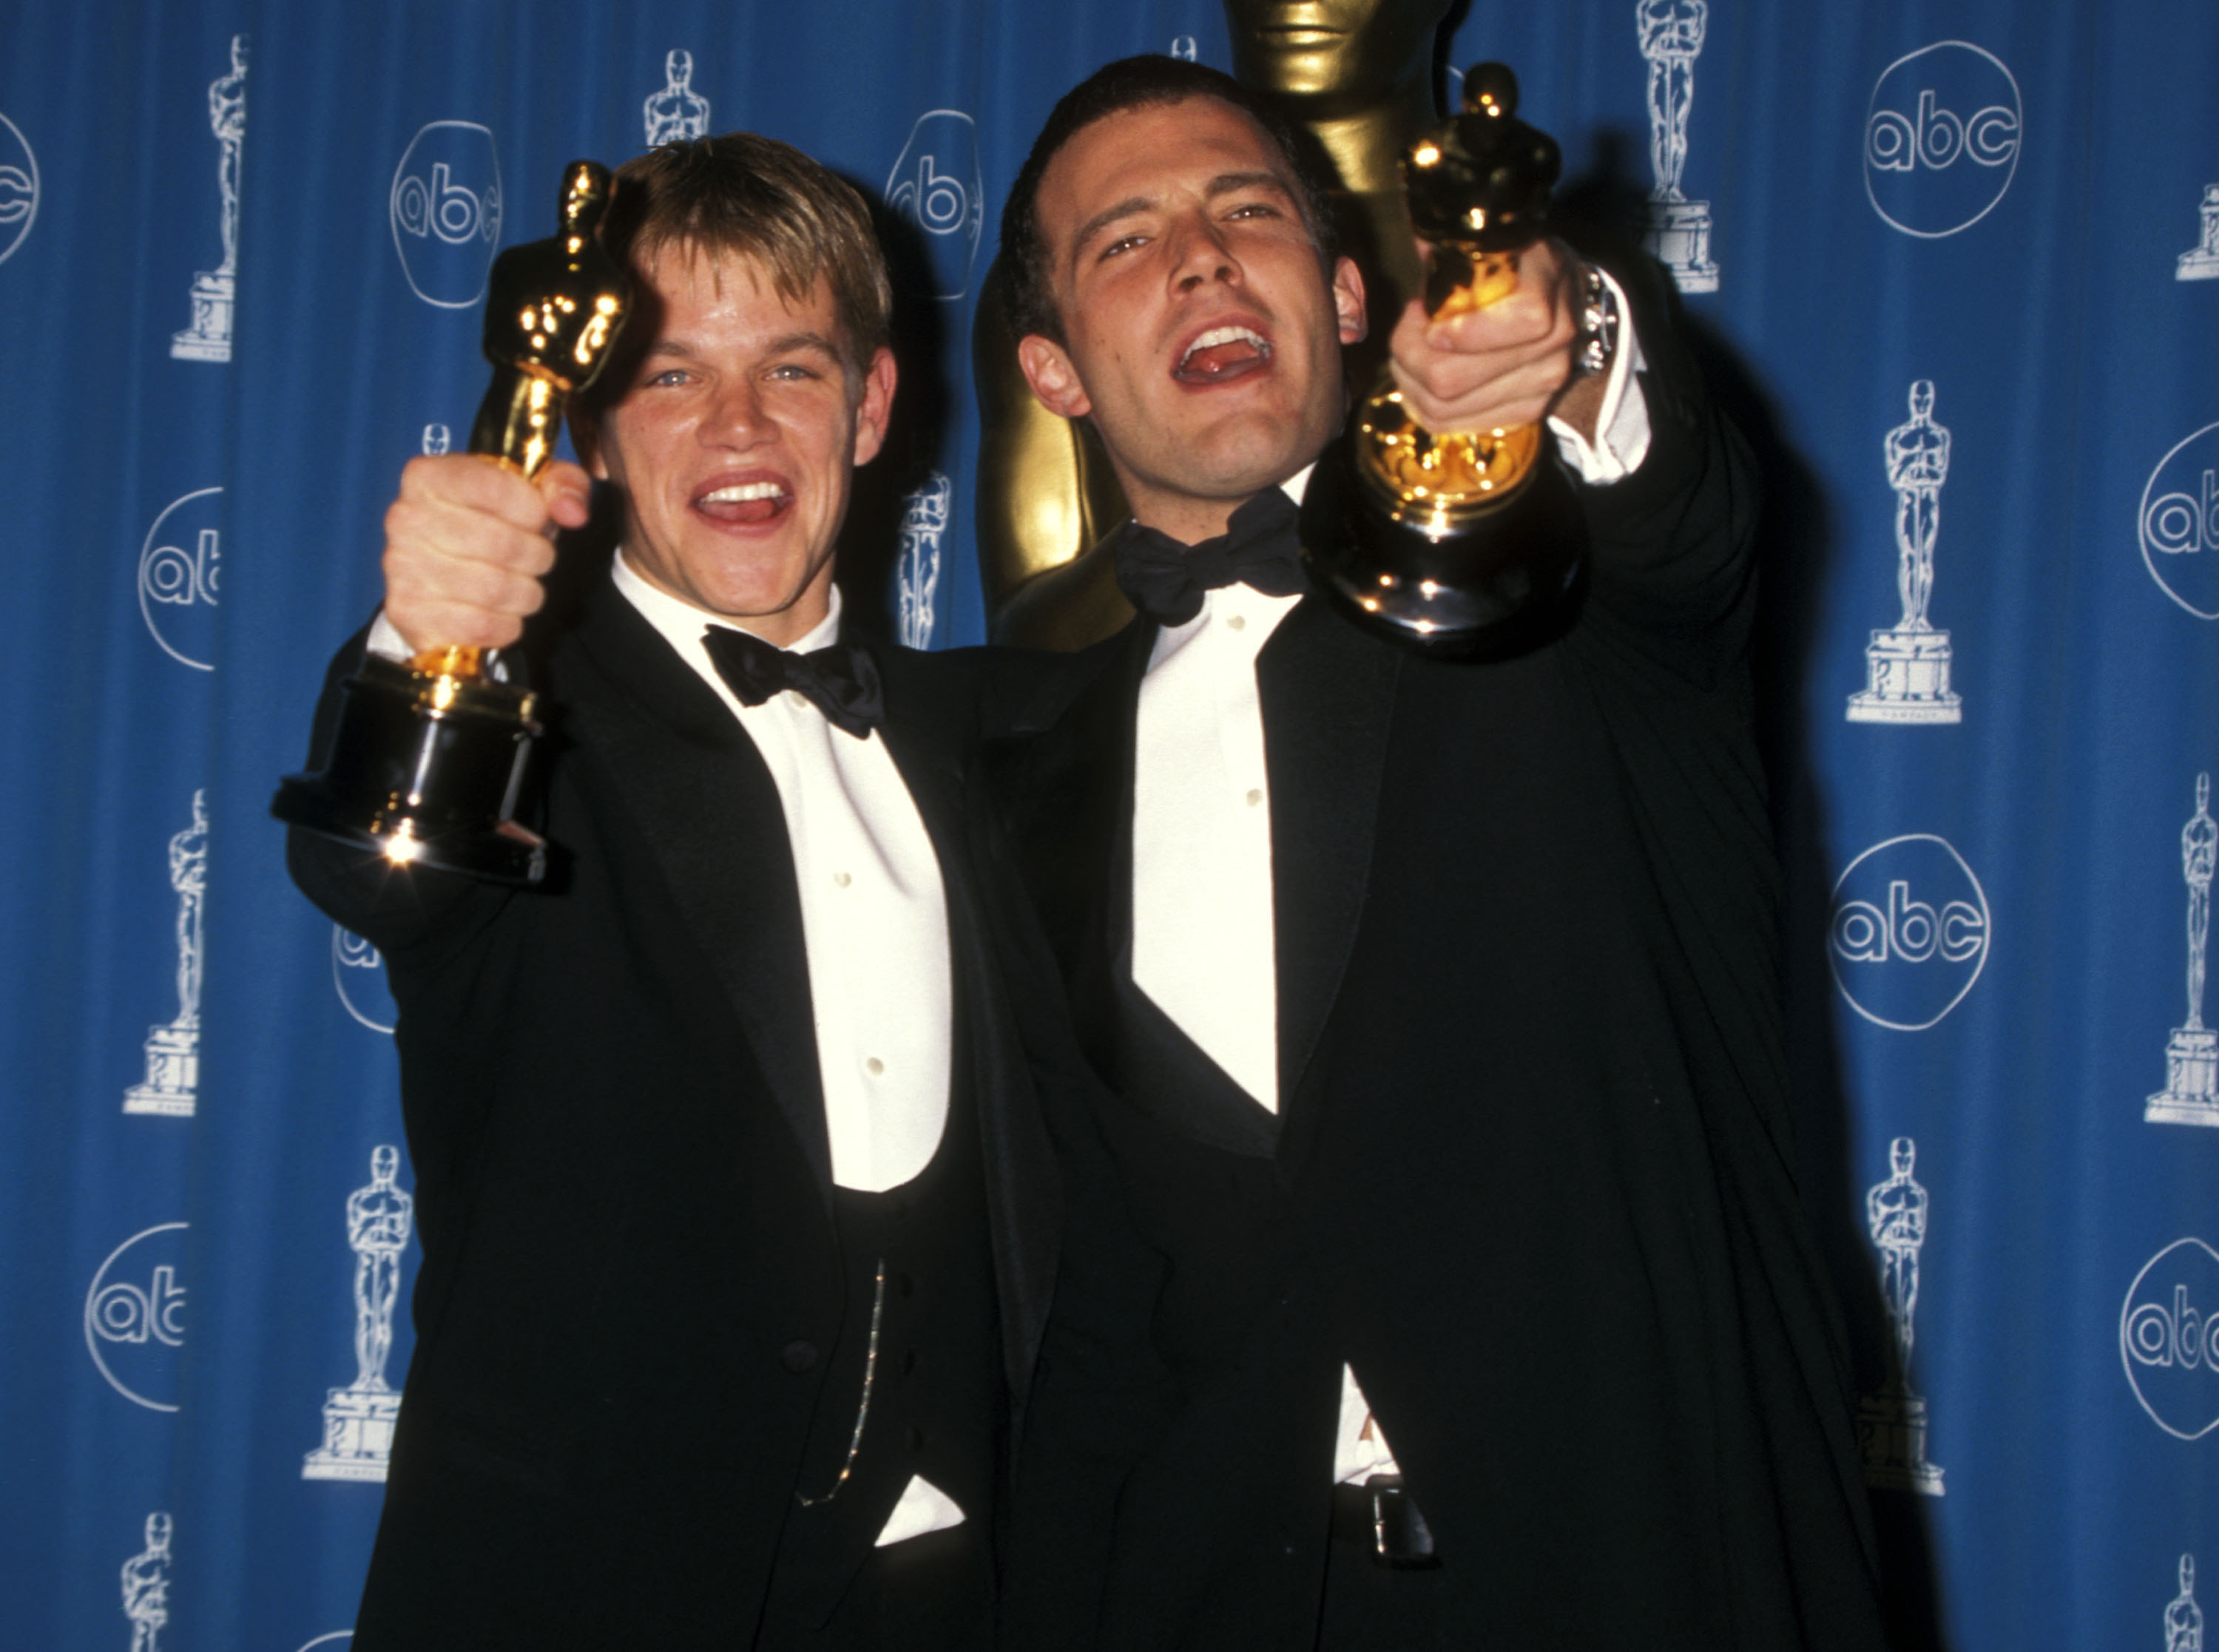 young matt and ben holding their awards